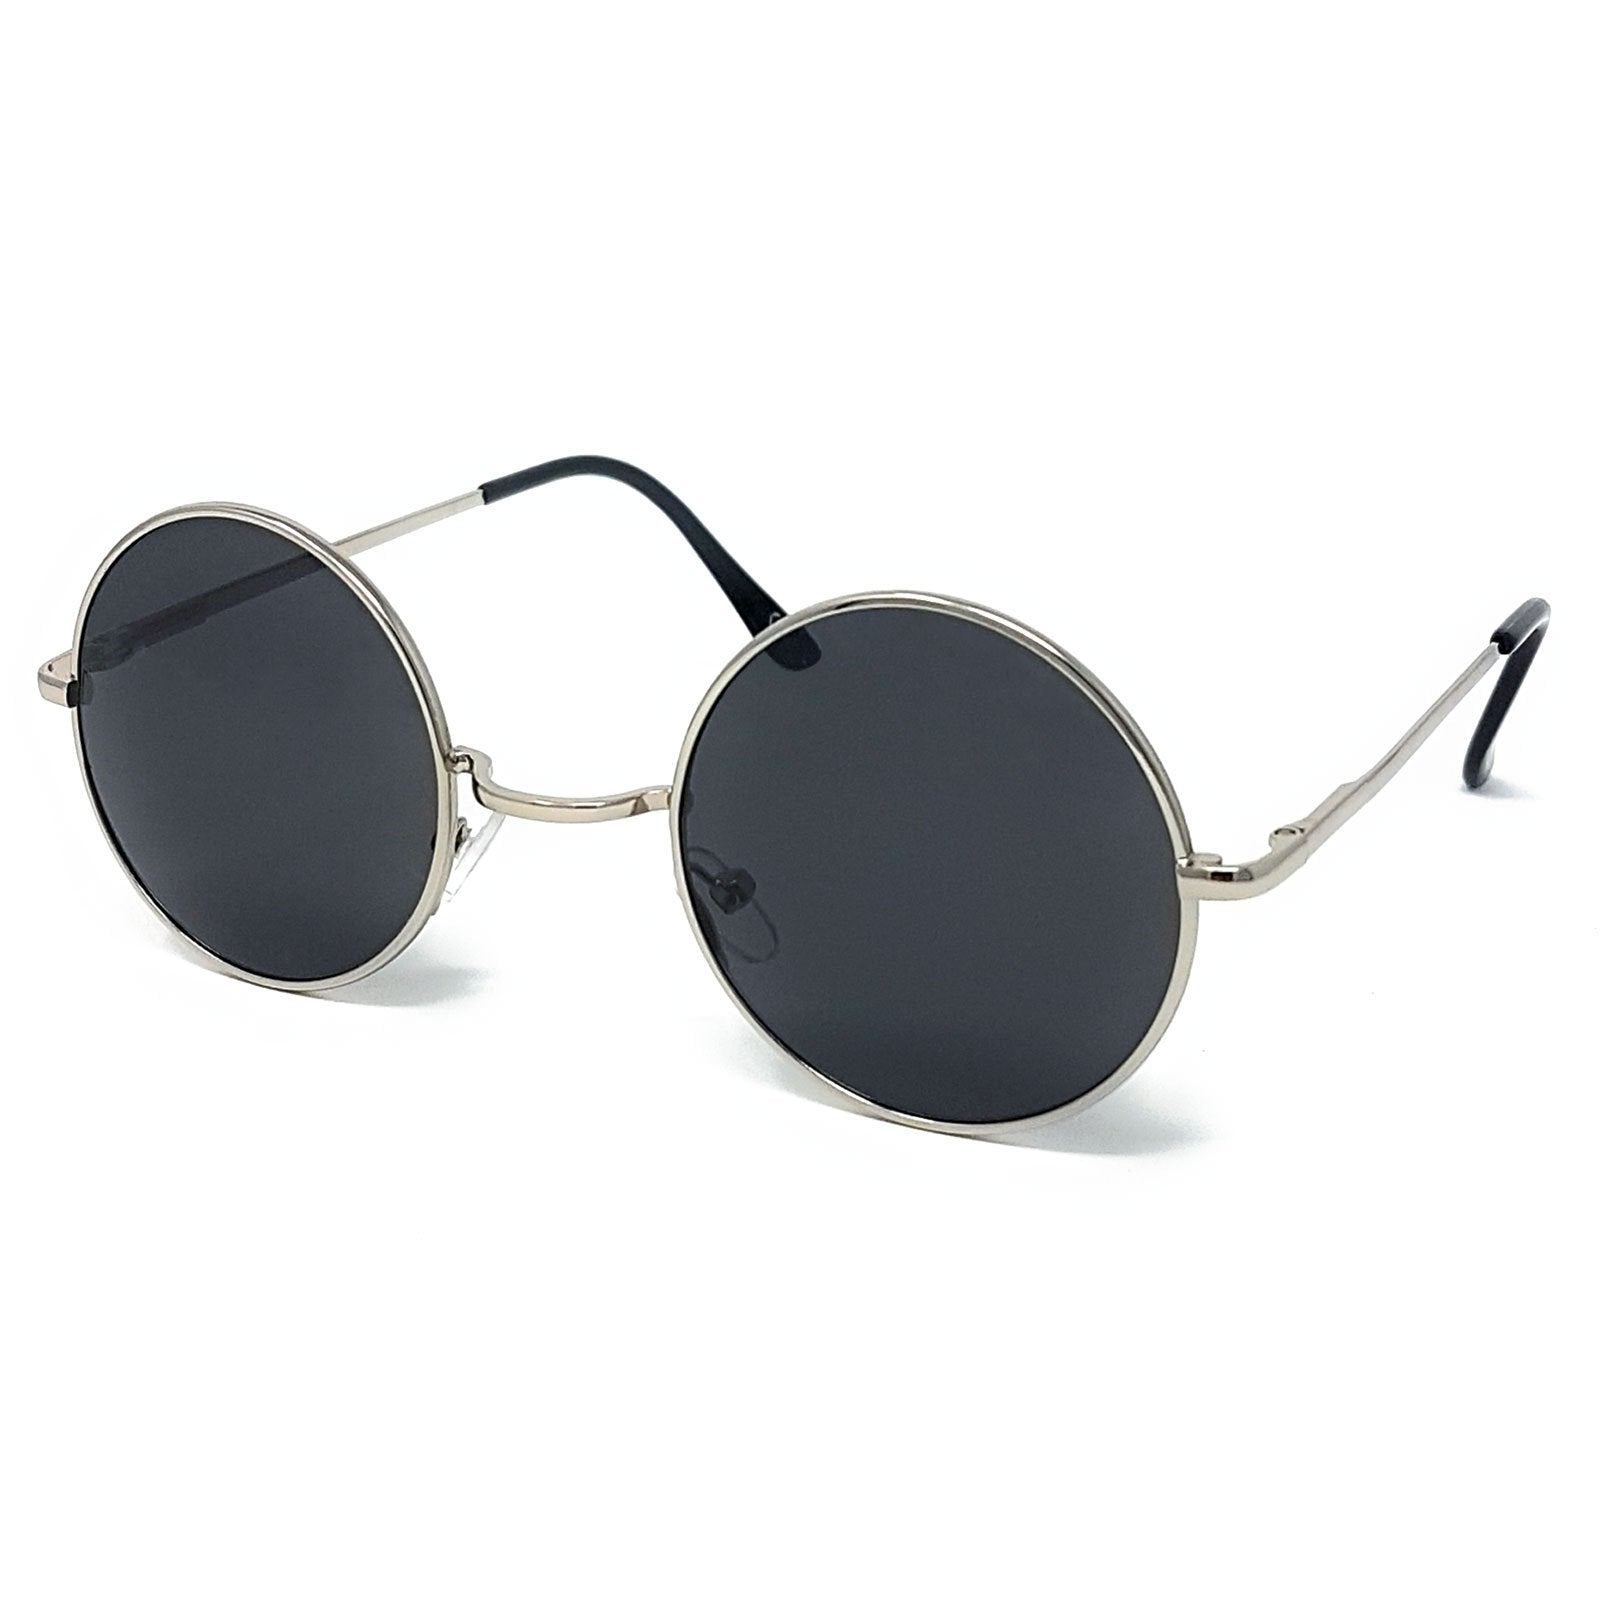 Wholesale Round Lens Sunglasses - Silver Frame, Black Lens